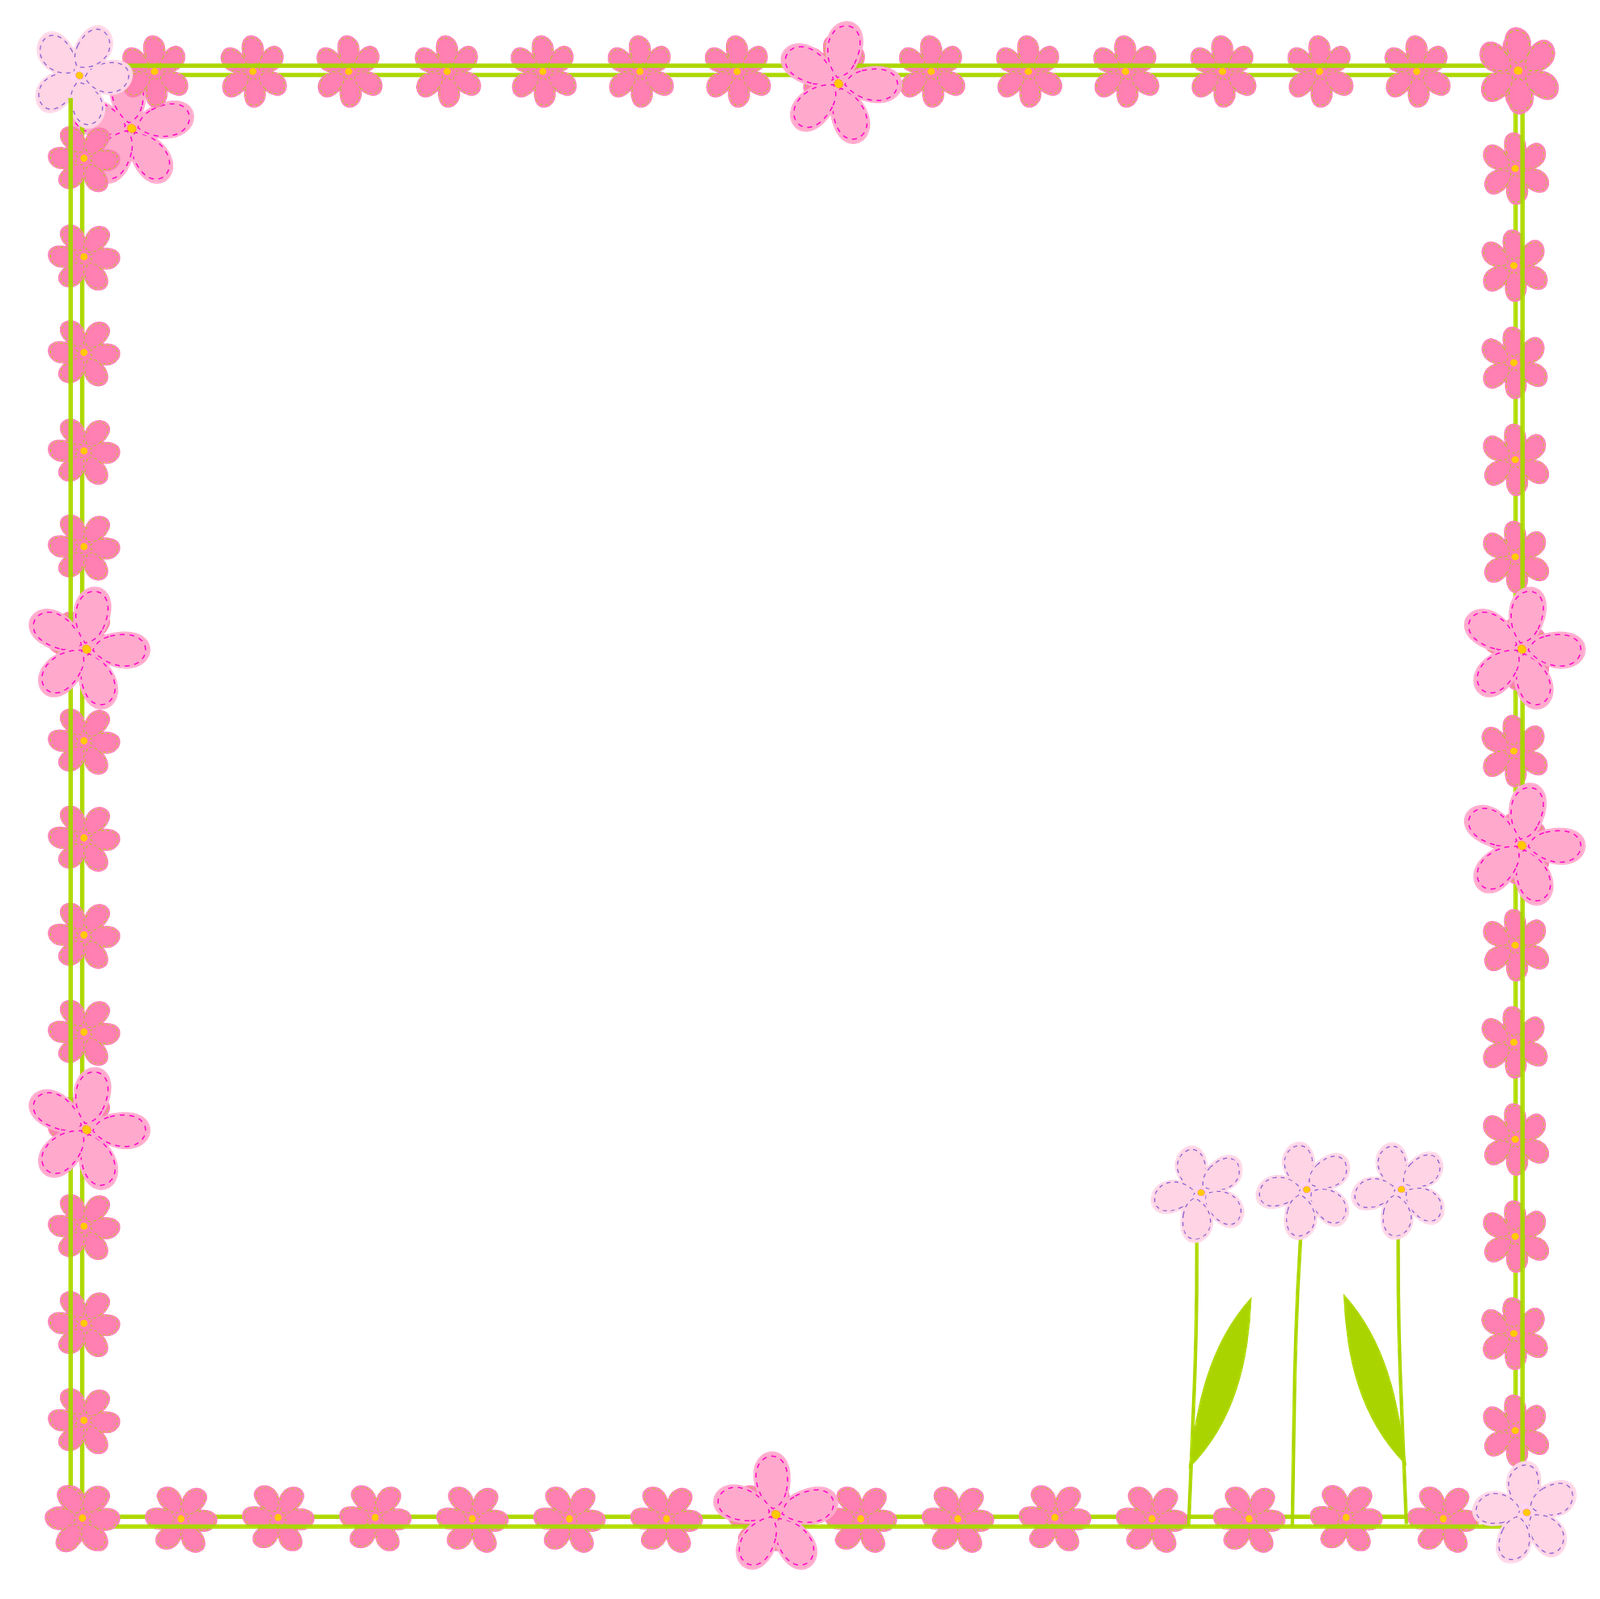 Flower border background design #1105